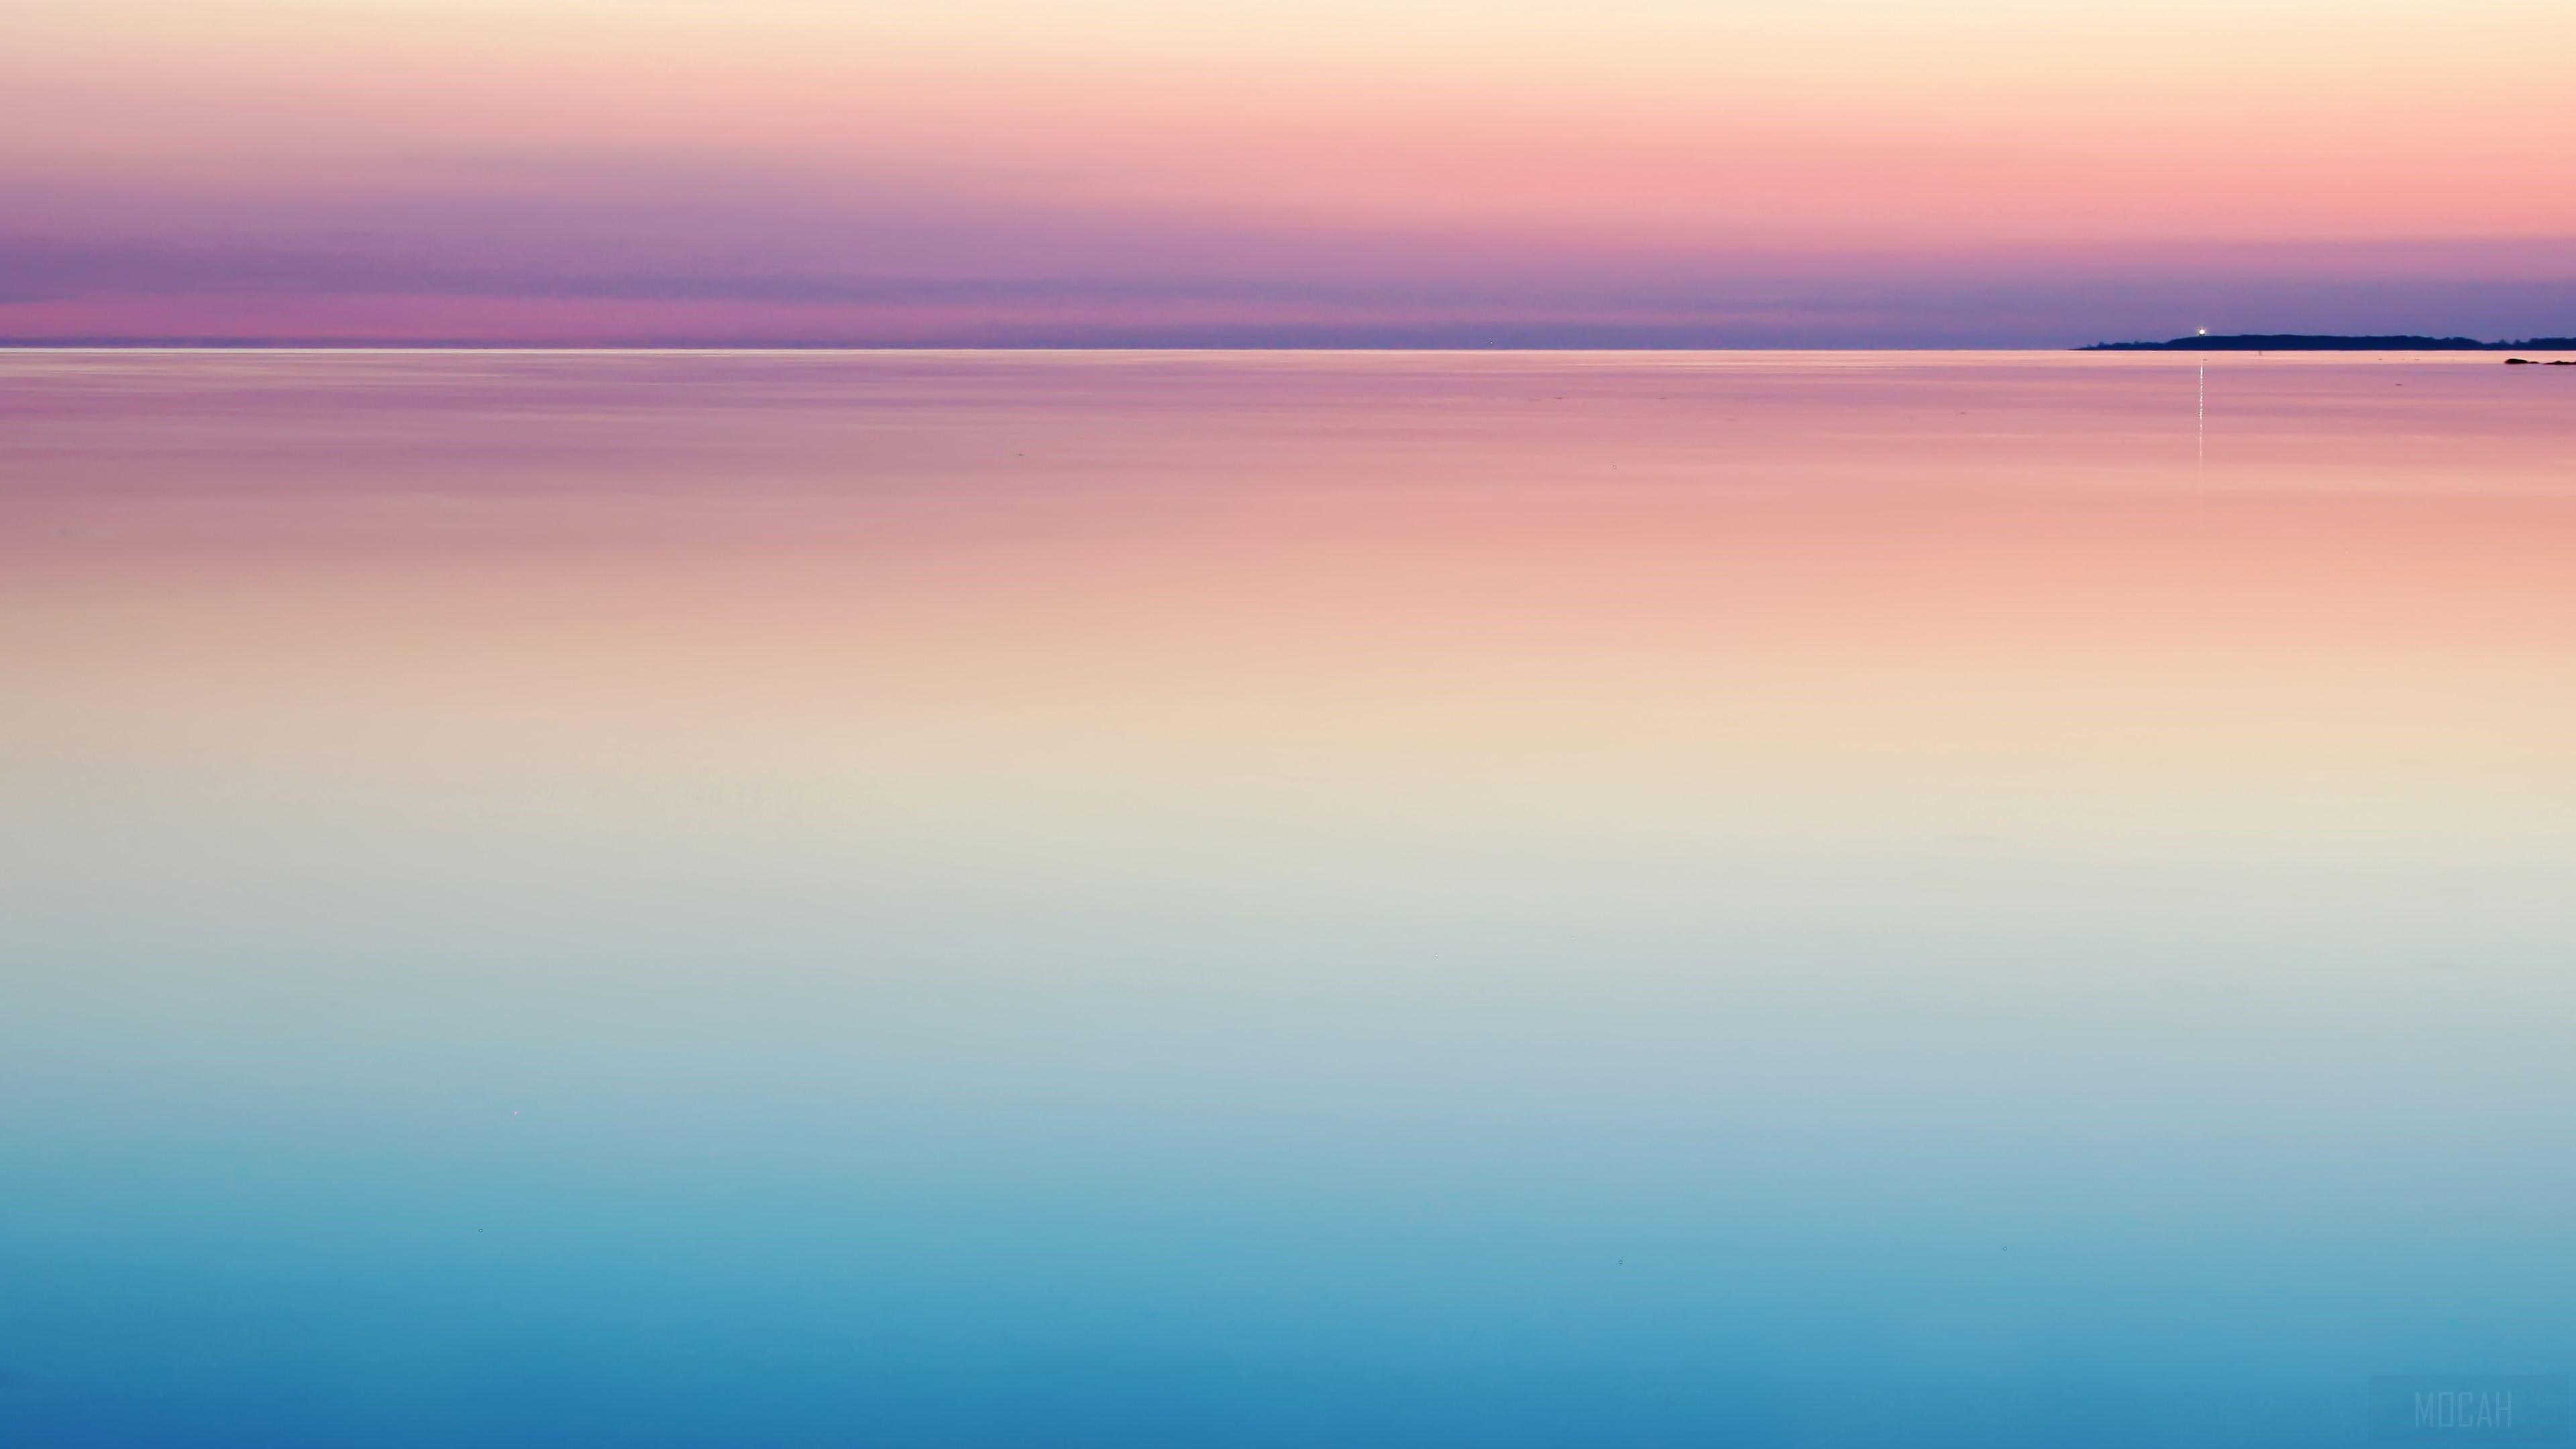 HD wallpaper, Calm Peaceful Colorful Sea Water Sunset 4K